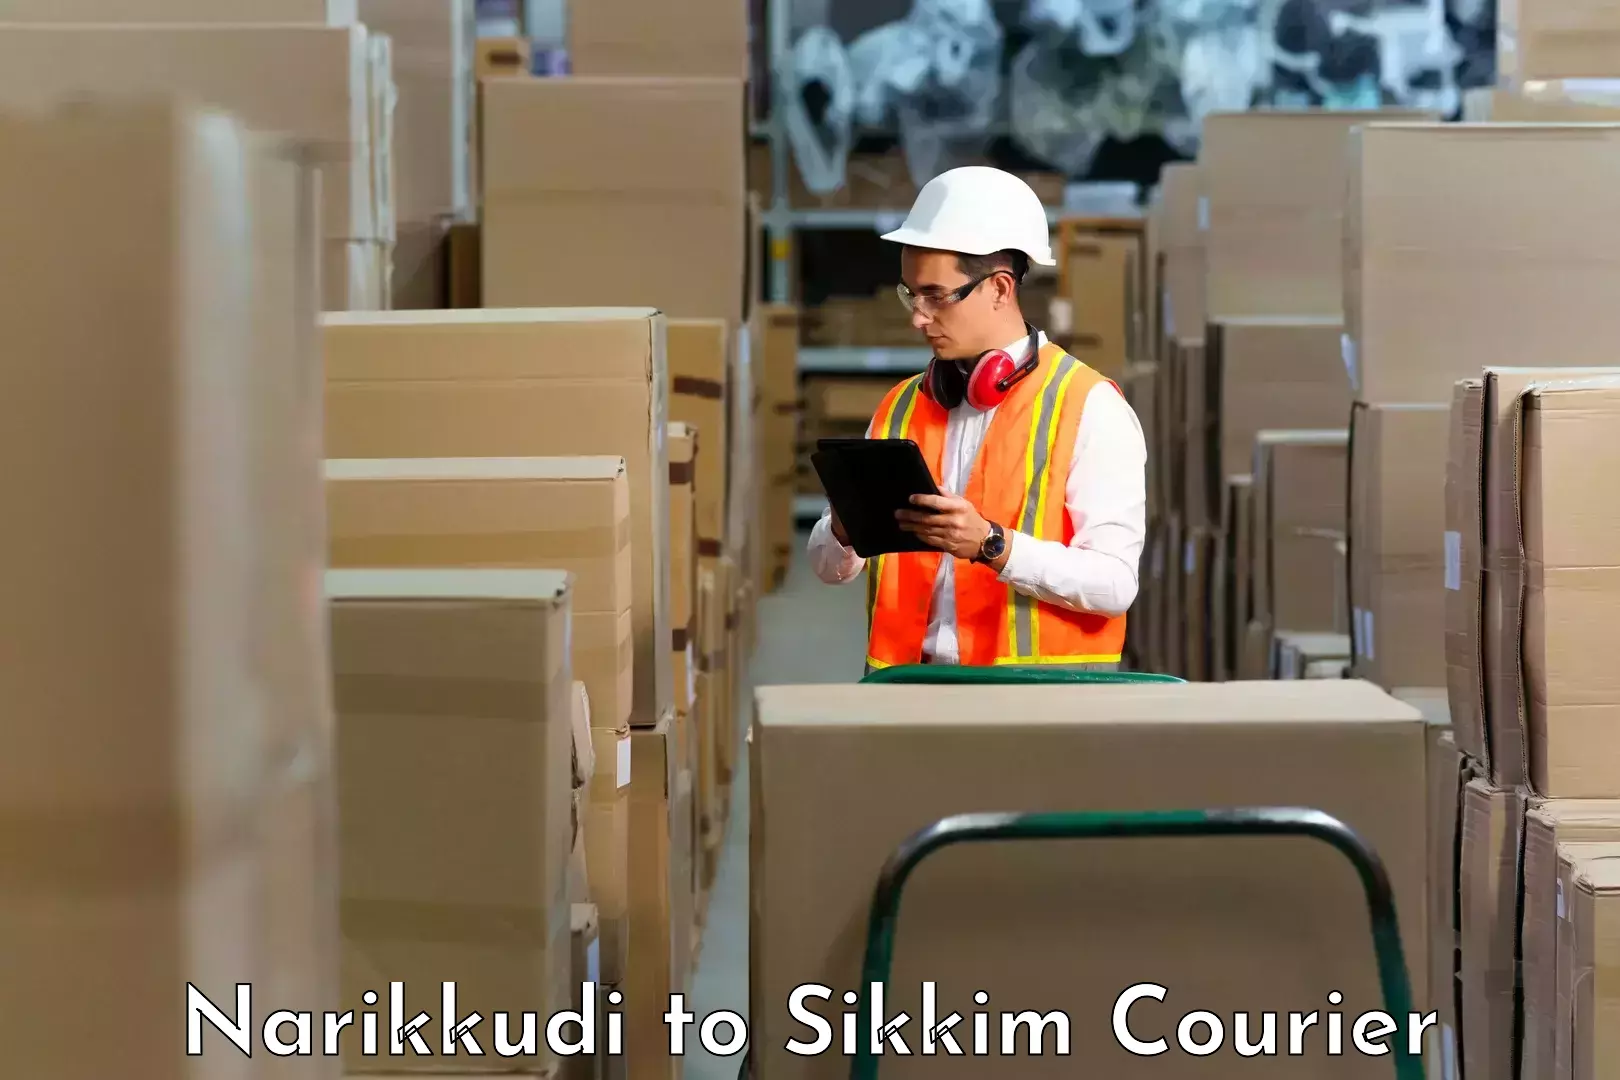 Speedy delivery service Narikkudi to East Sikkim